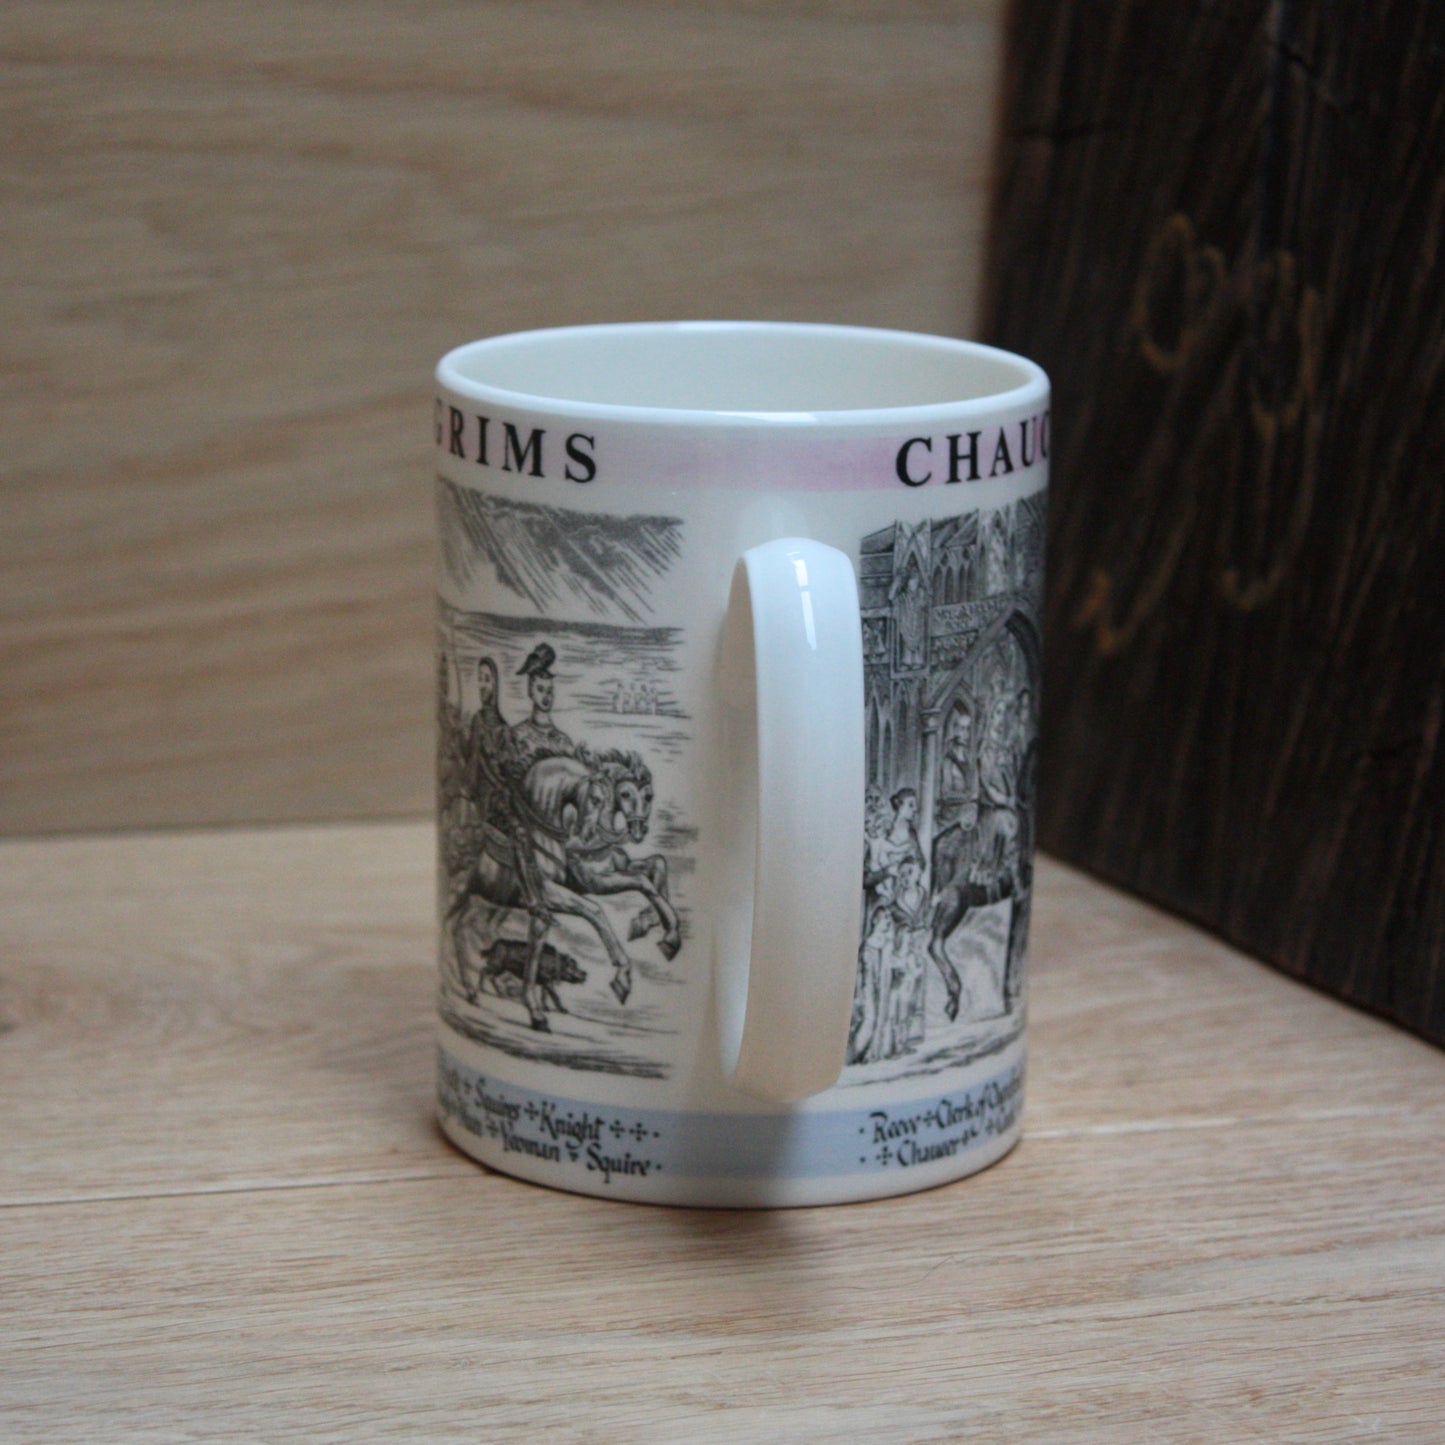 
                  
                    wedgwood Chaucer's Canterbury tales mug
                  
                